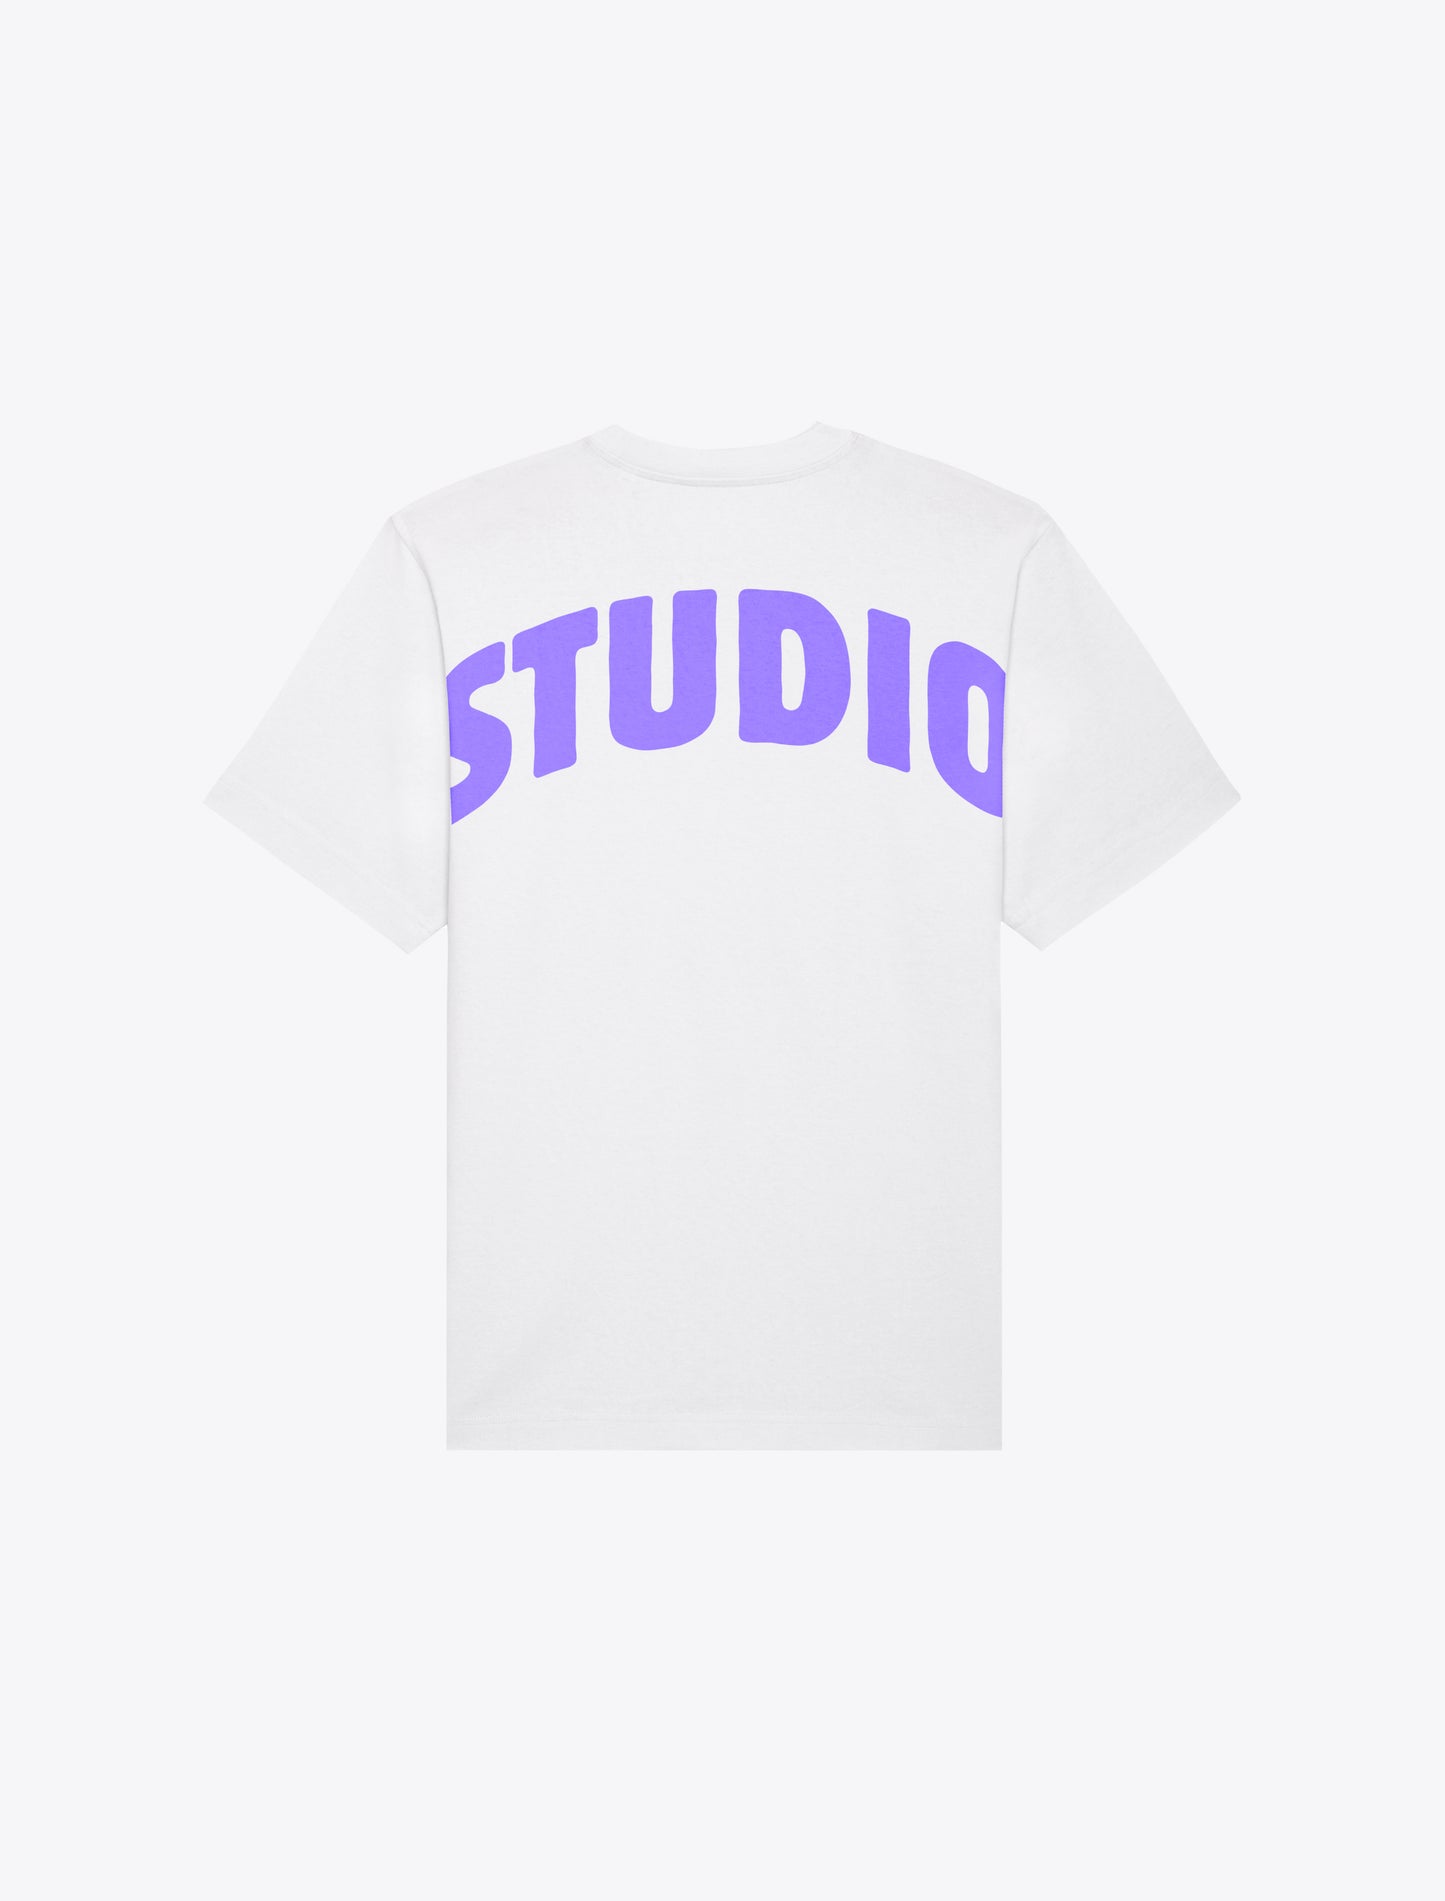 Studio shirt